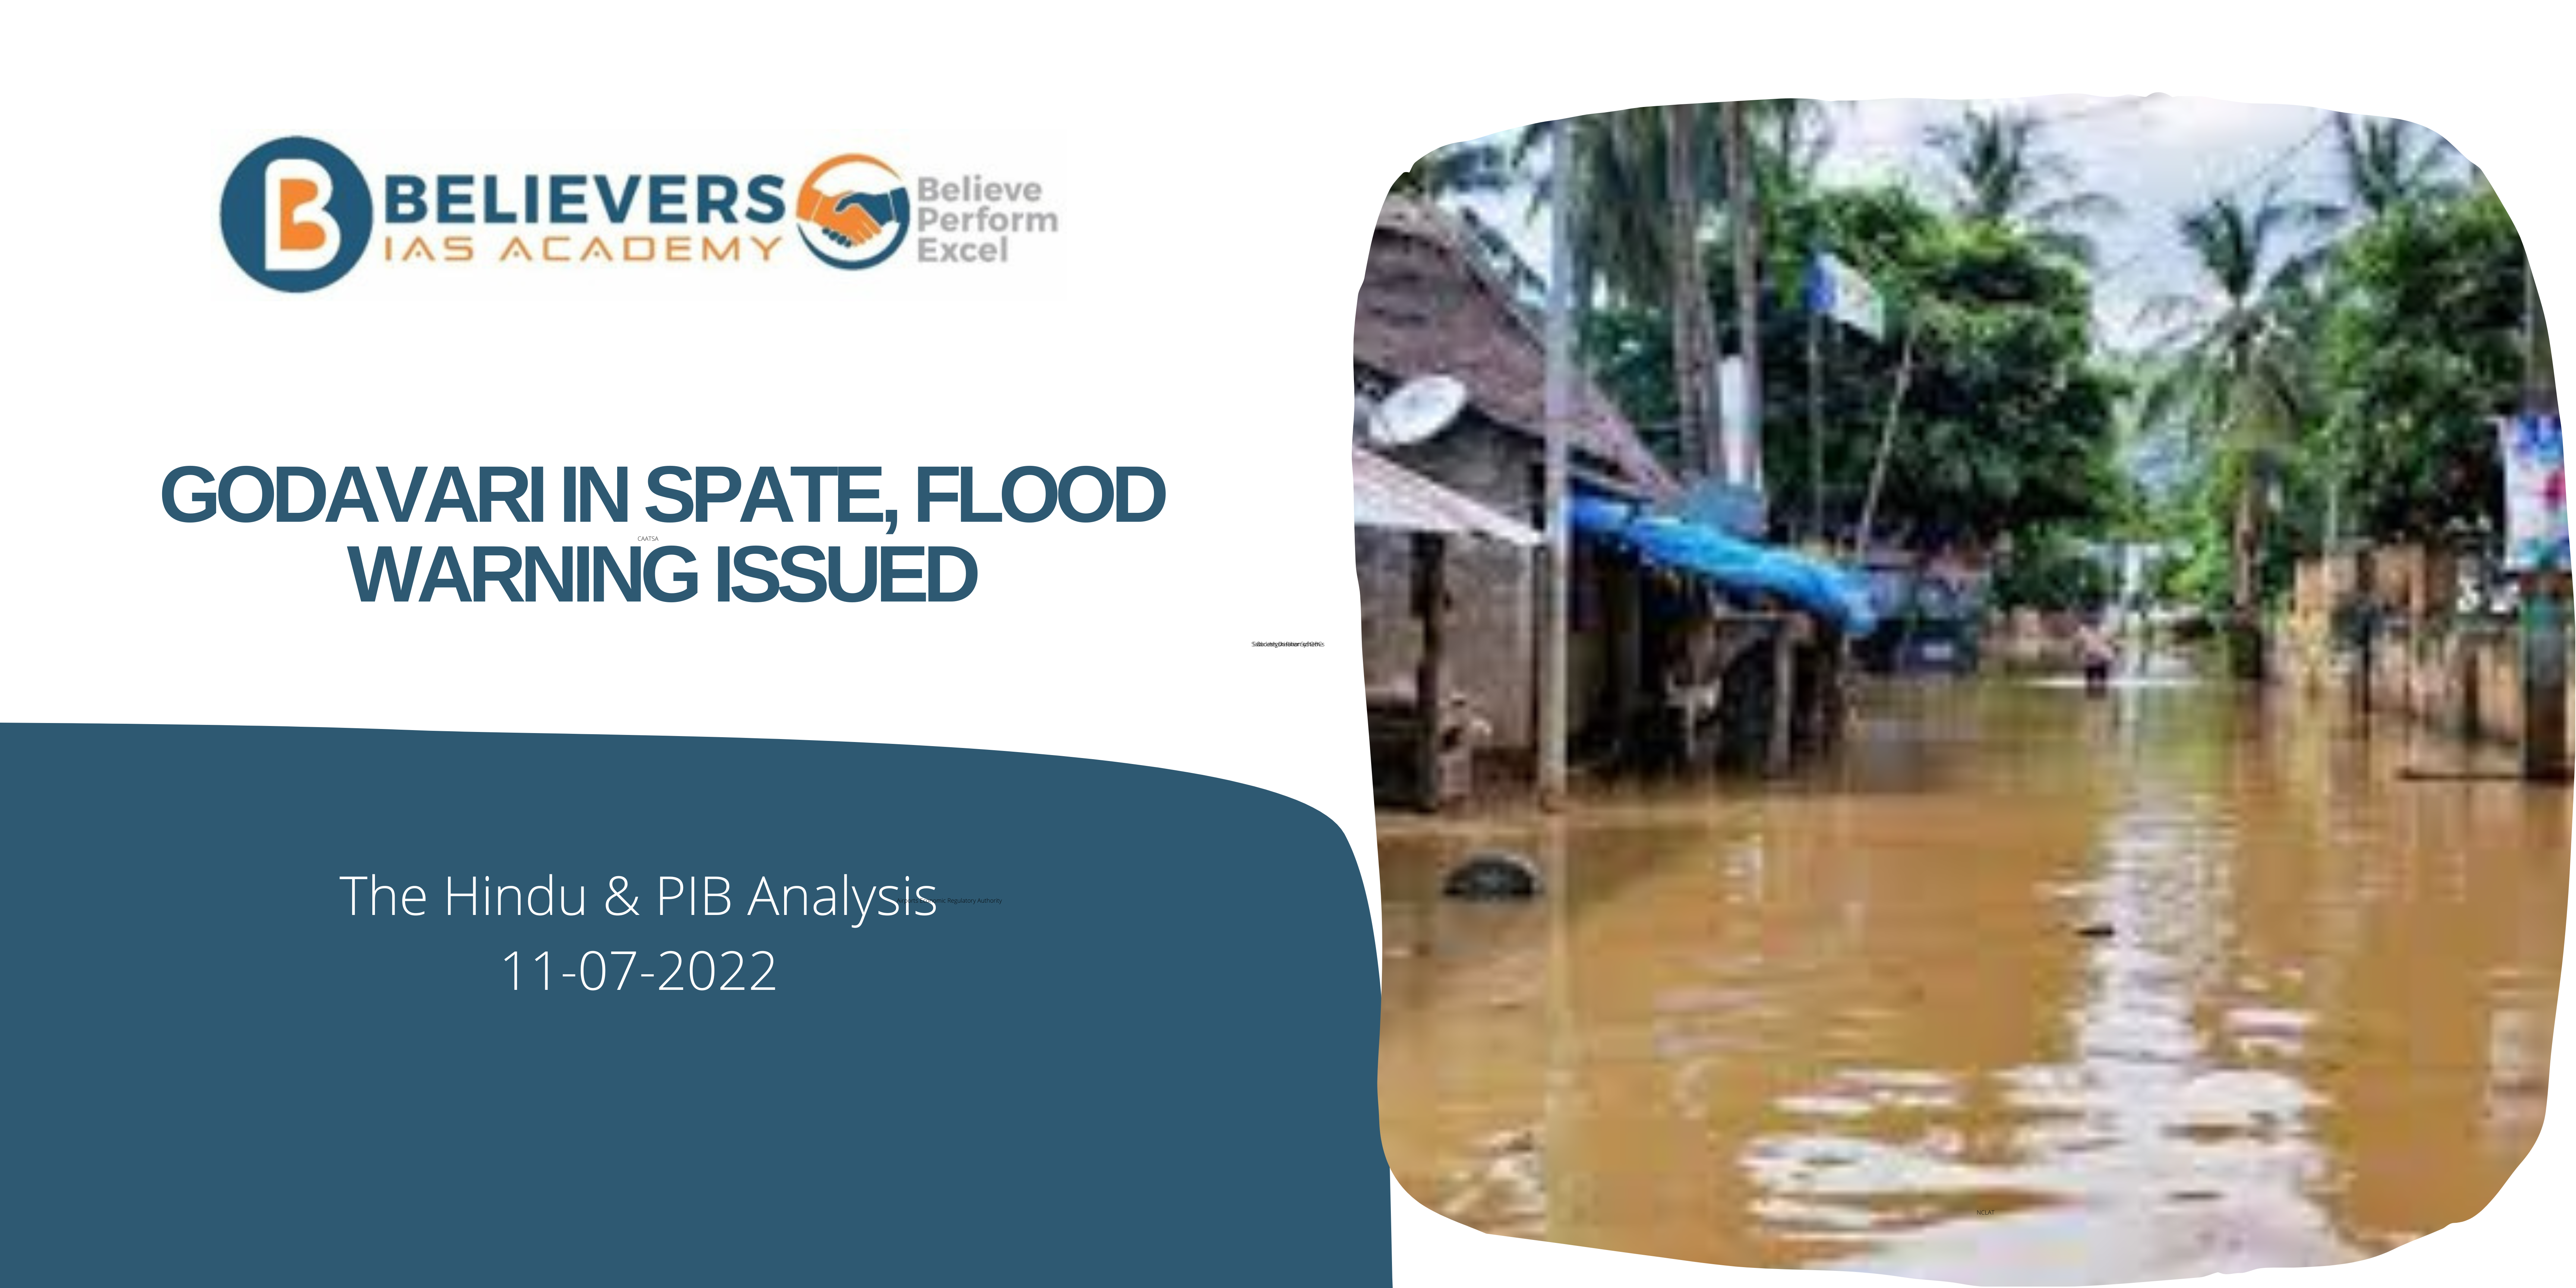 IAS Current affairs - Godavari in Spate, Flood Warning Issued